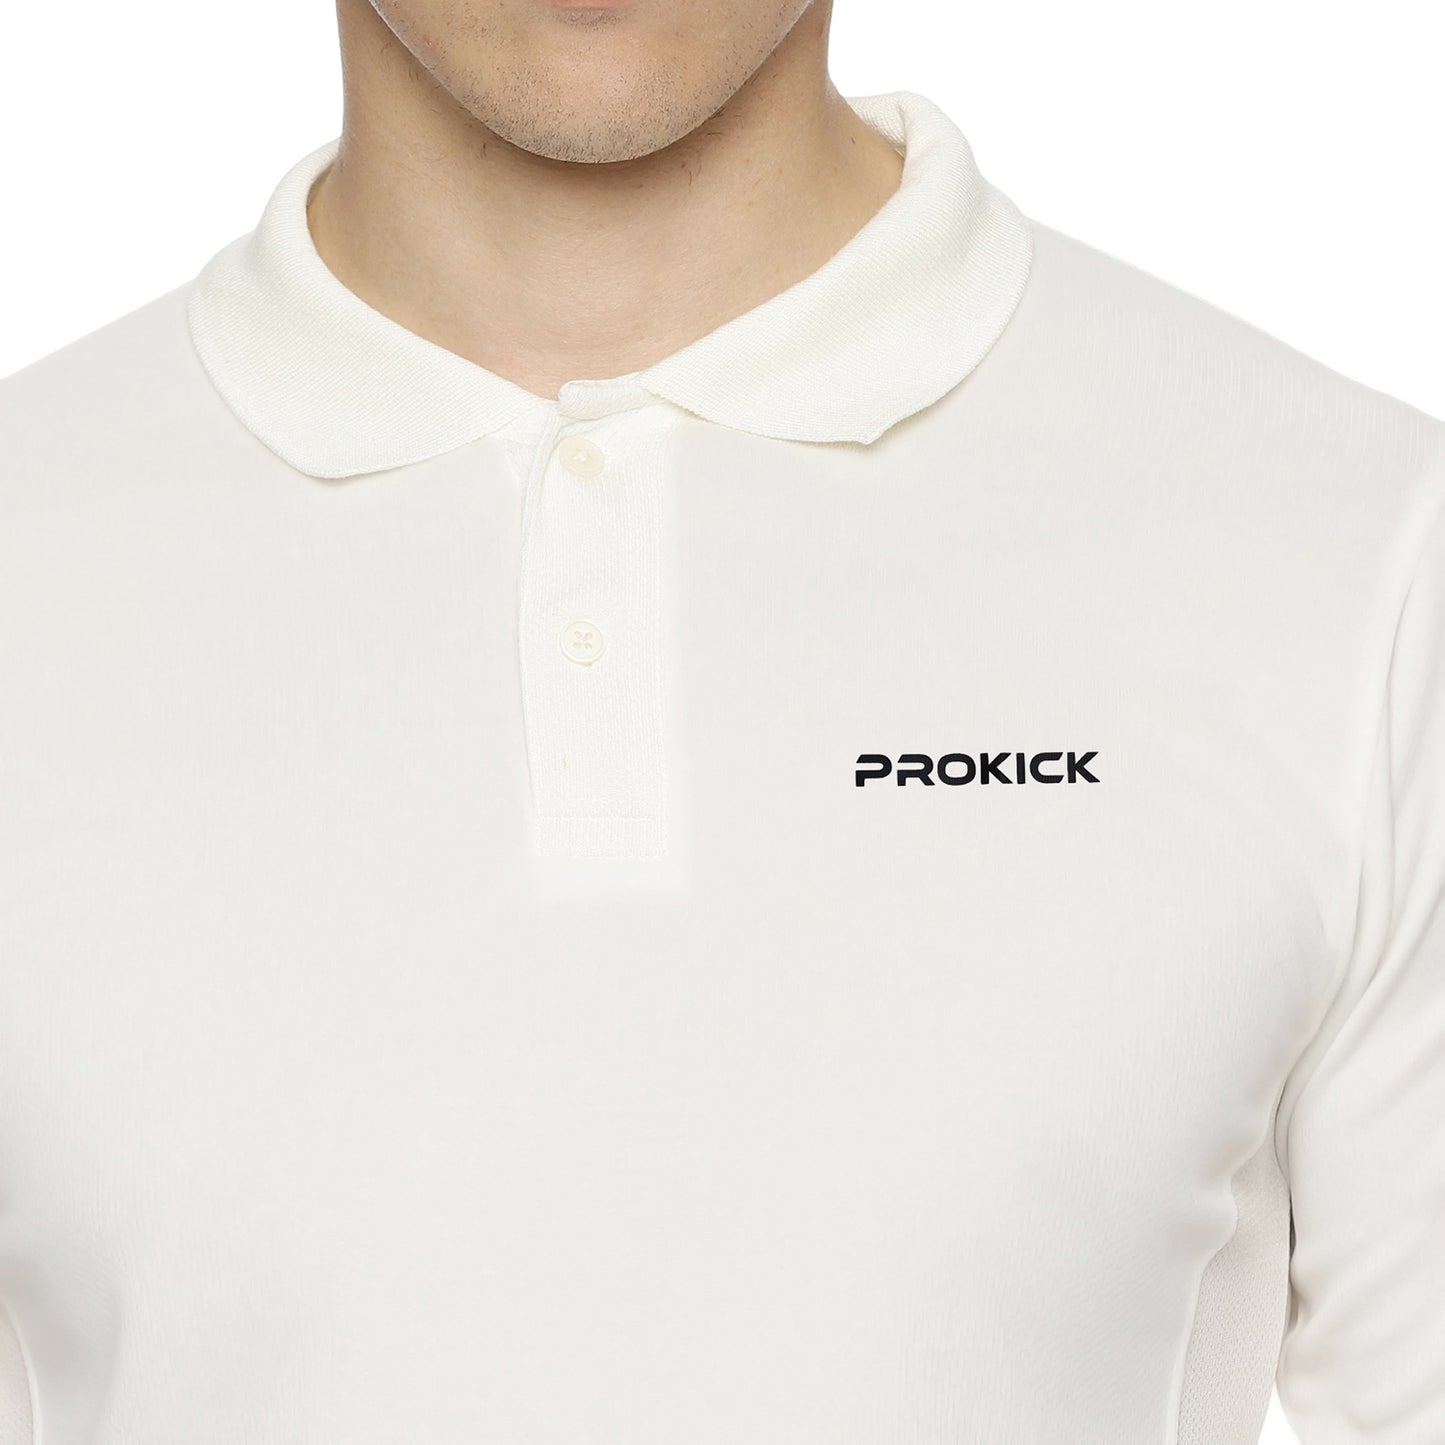 Prokick Club Full Sleeves Cricket T-Shirt, Off White - Best Price online Prokicksports.com